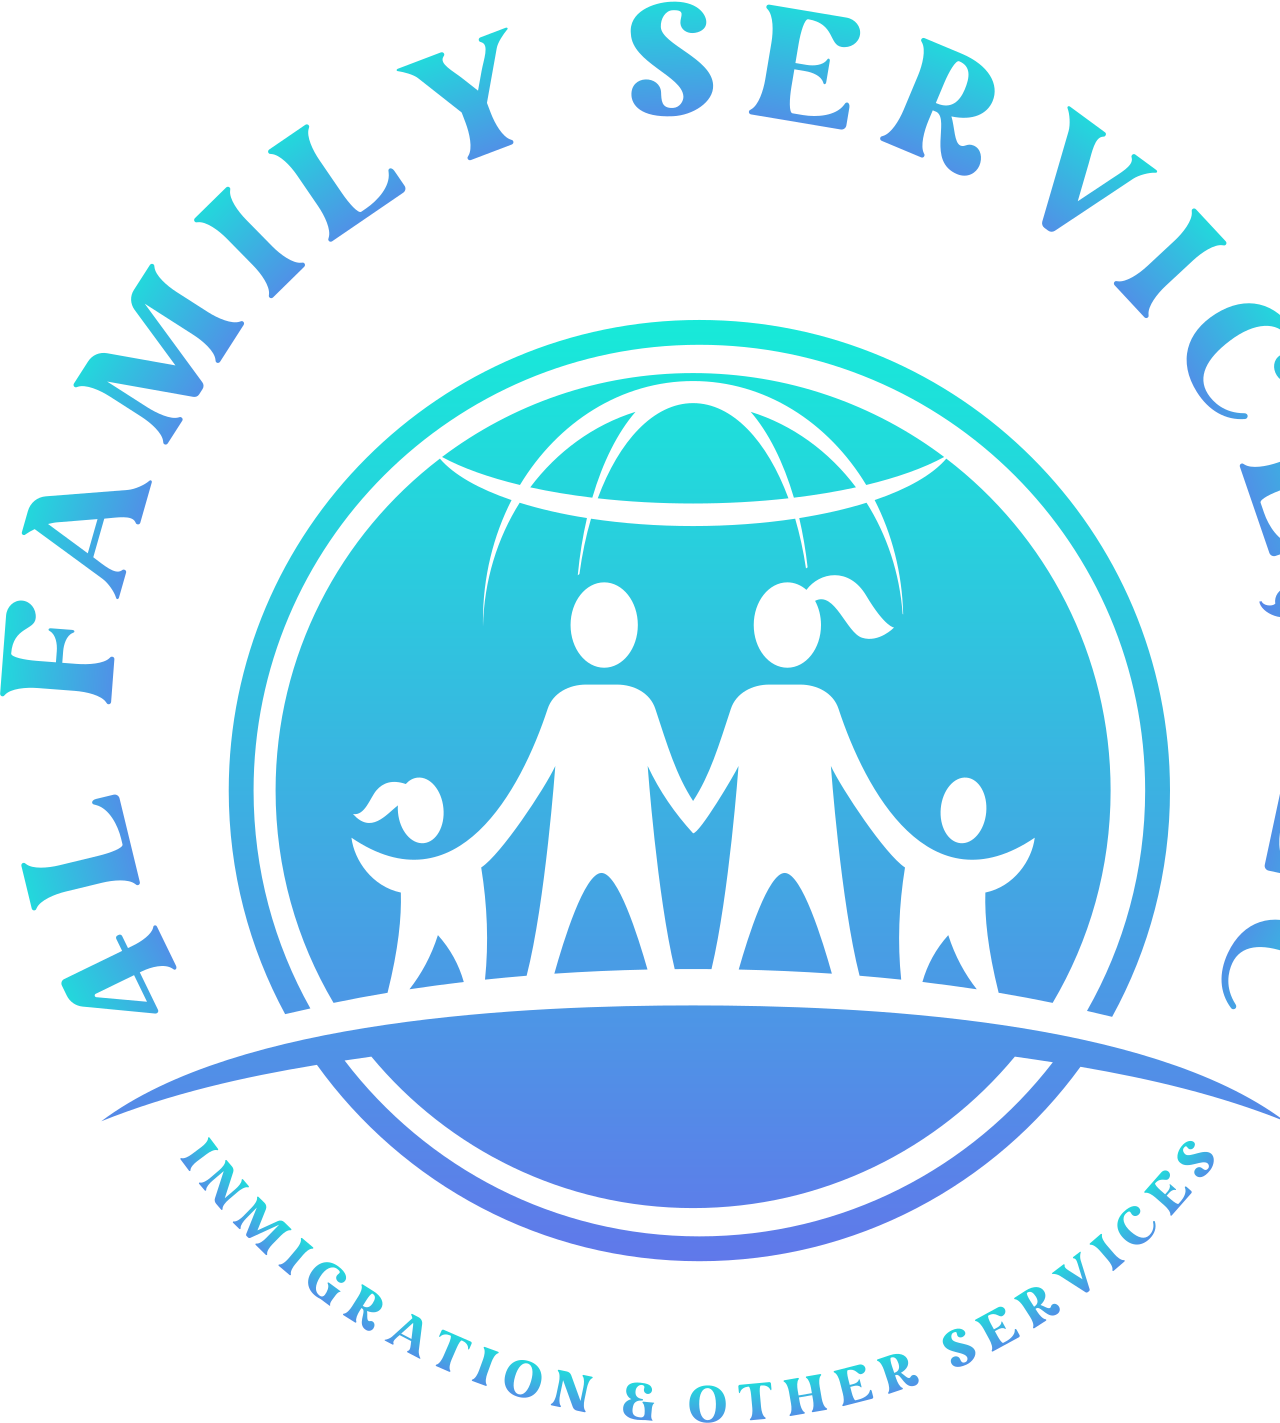 4L FAMILY SERVICE,LLC's web page